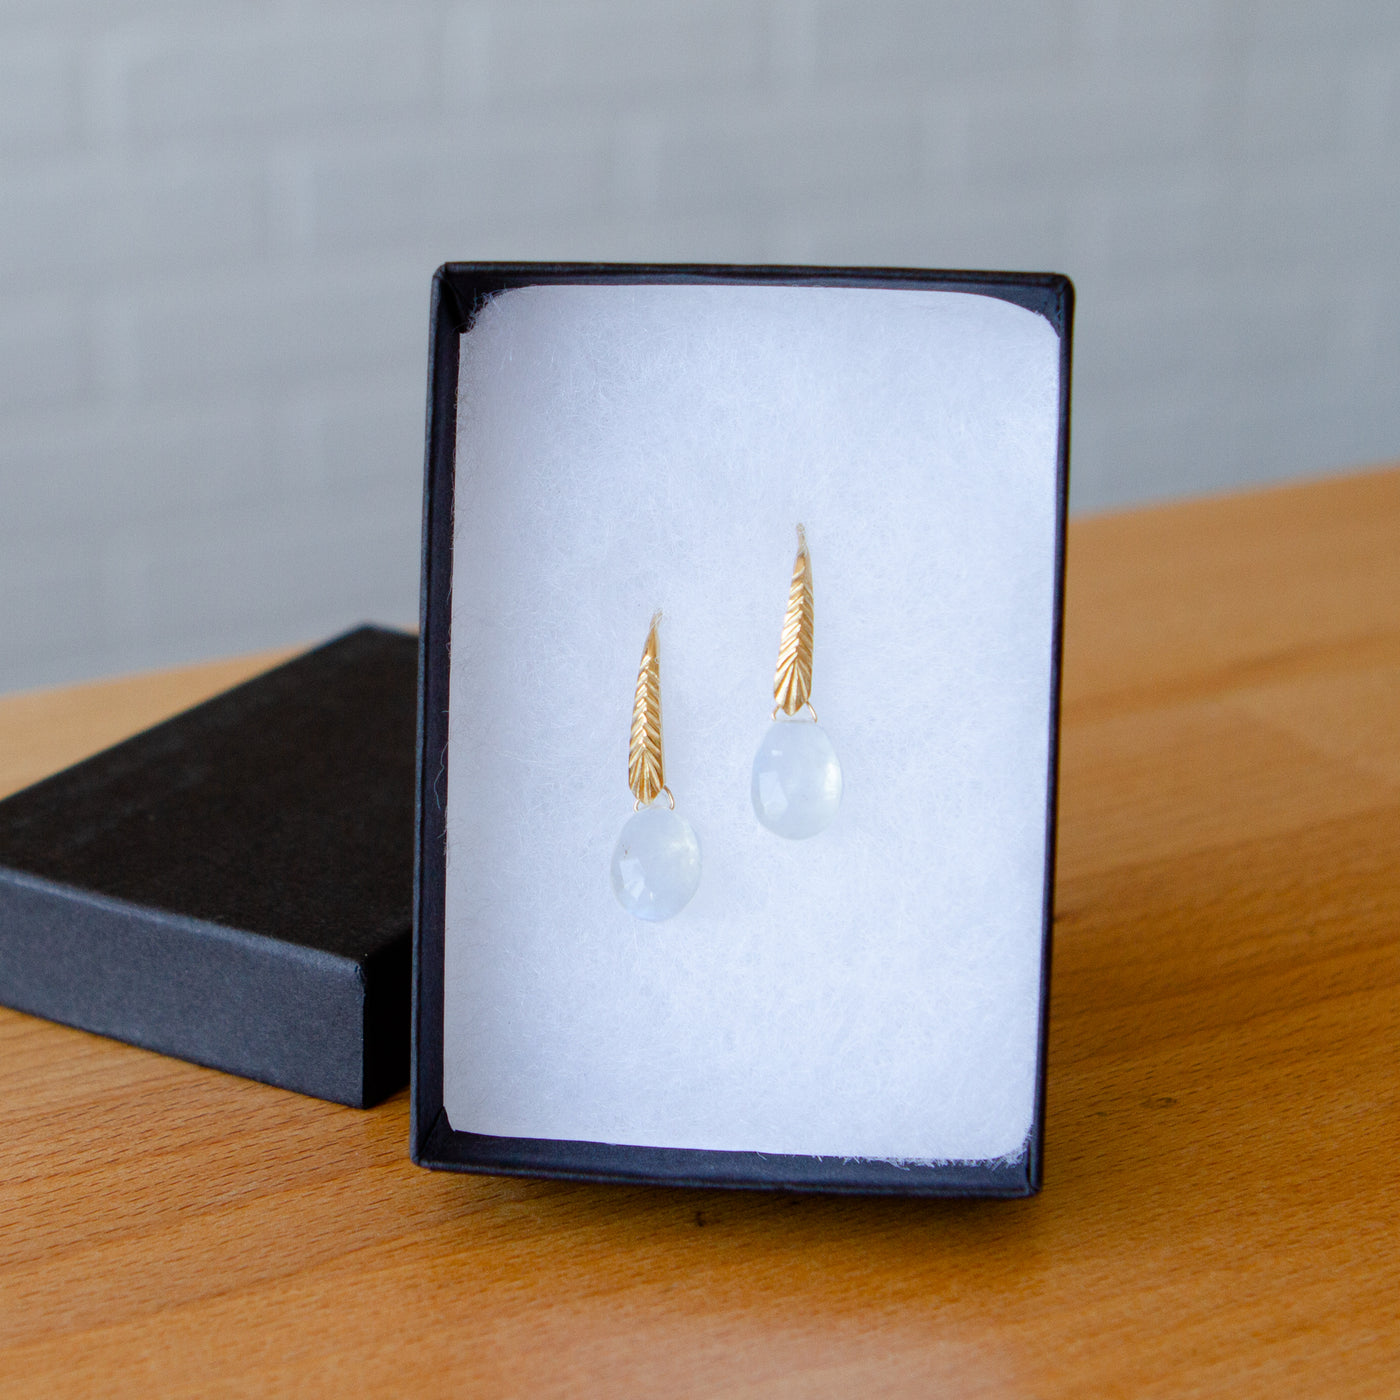 Vermeil Herringbone dangle earrings with pear shape moonstone drops in a gift box